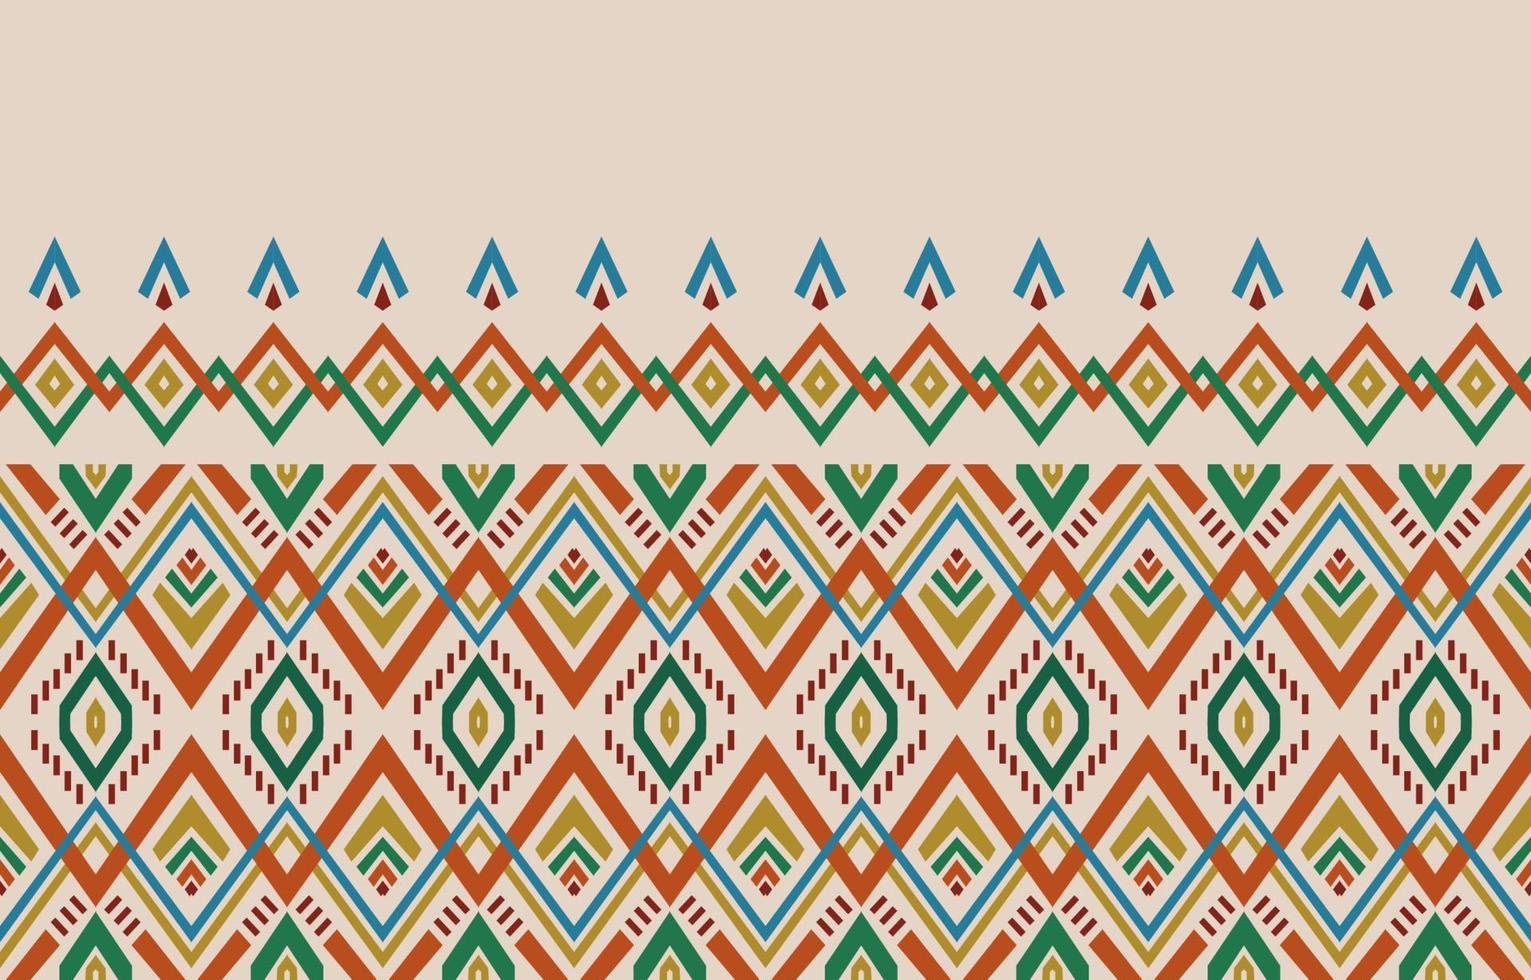 patrón étnico sin fisuras. Fondo de bordado tradicional indio africano tribal geométrico vectorial. moda bohemia. ikat tela alfombra batik ornamento cheurón textil decoración papel pintado estilo boho vector